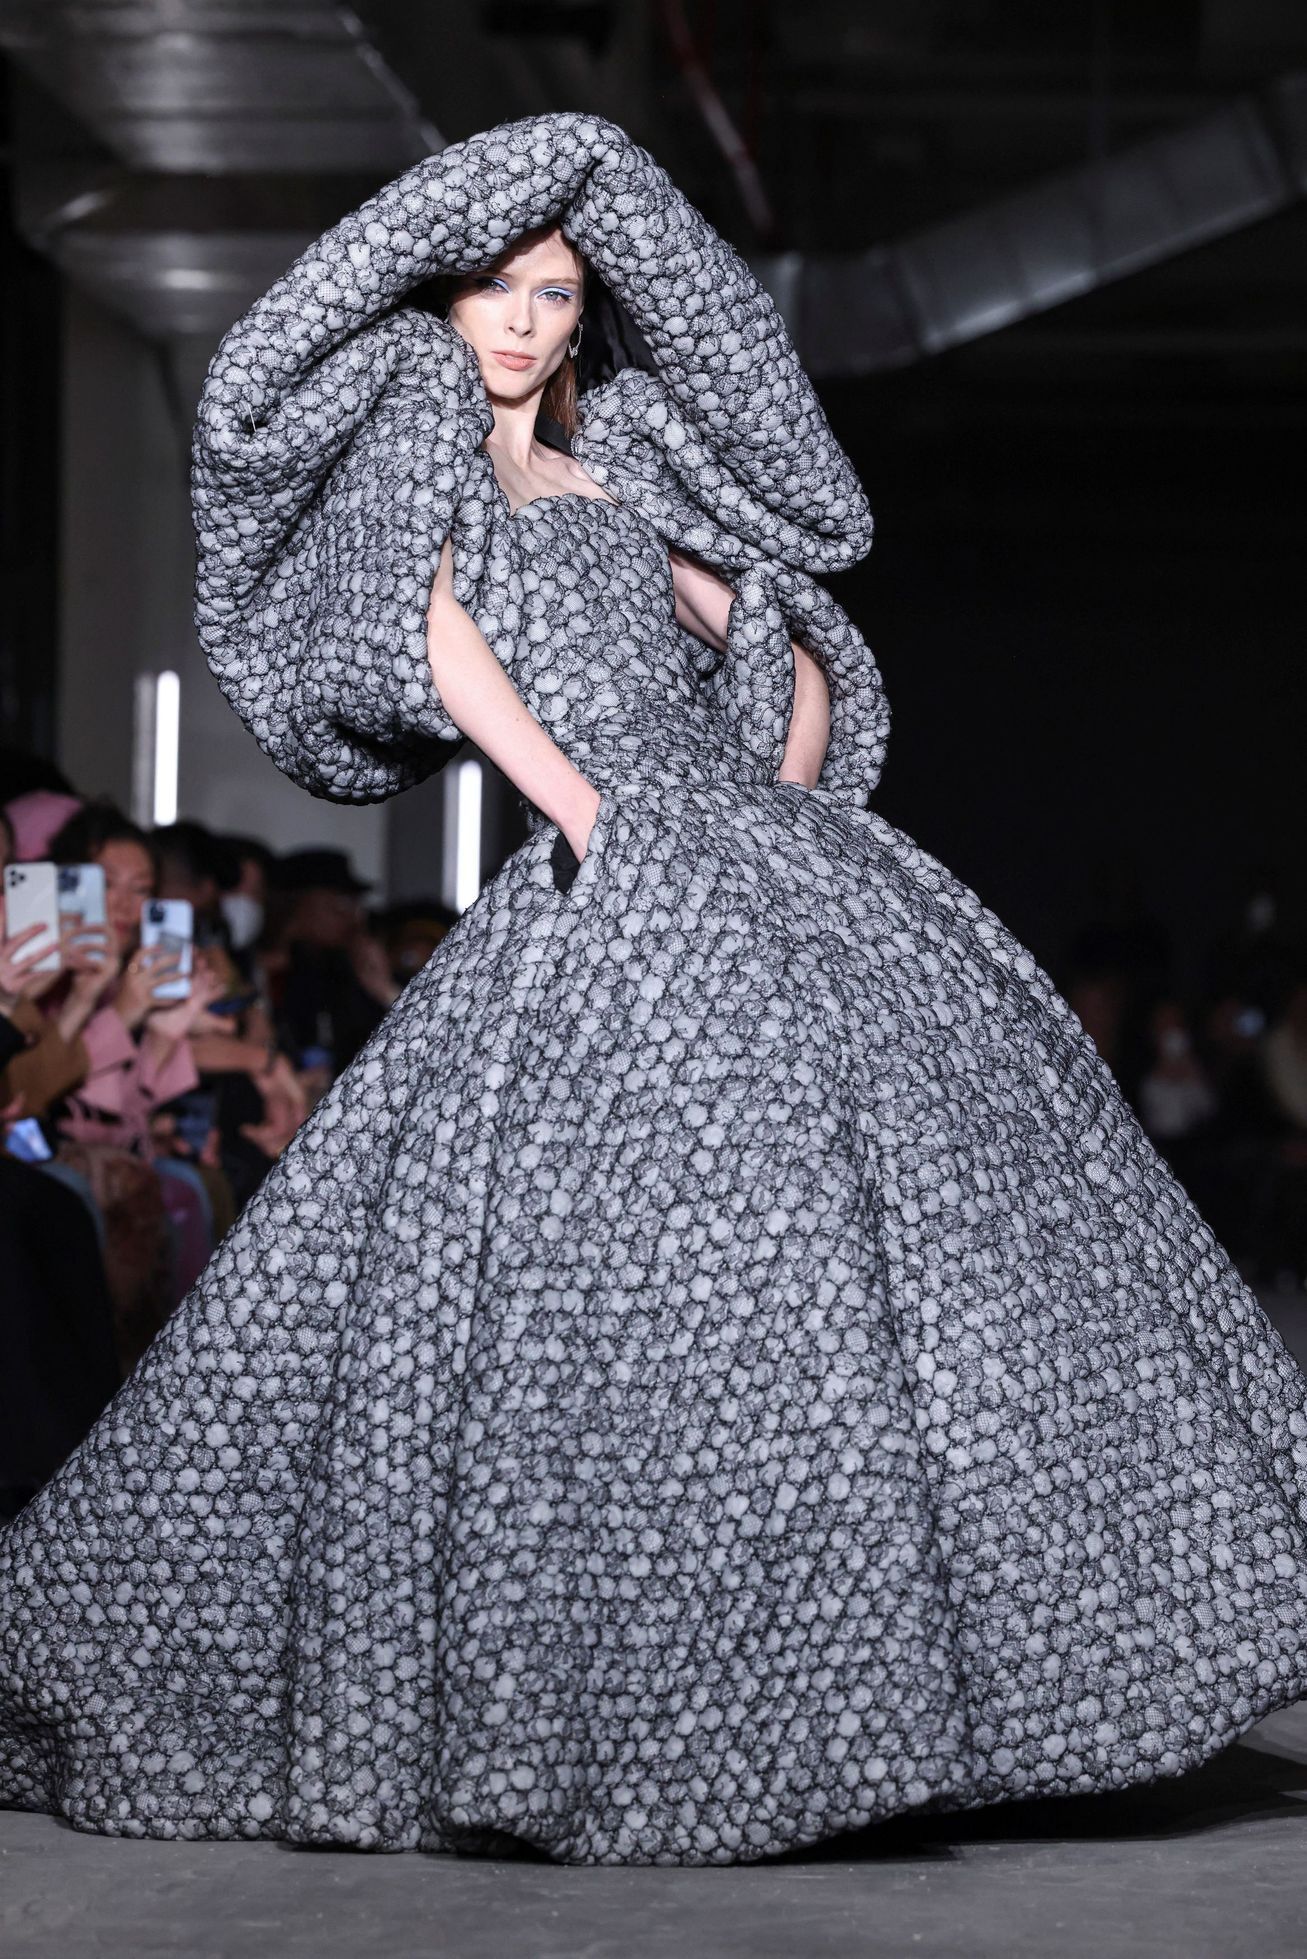 Christian Siriano's creations on display during New York Fashion Week ...